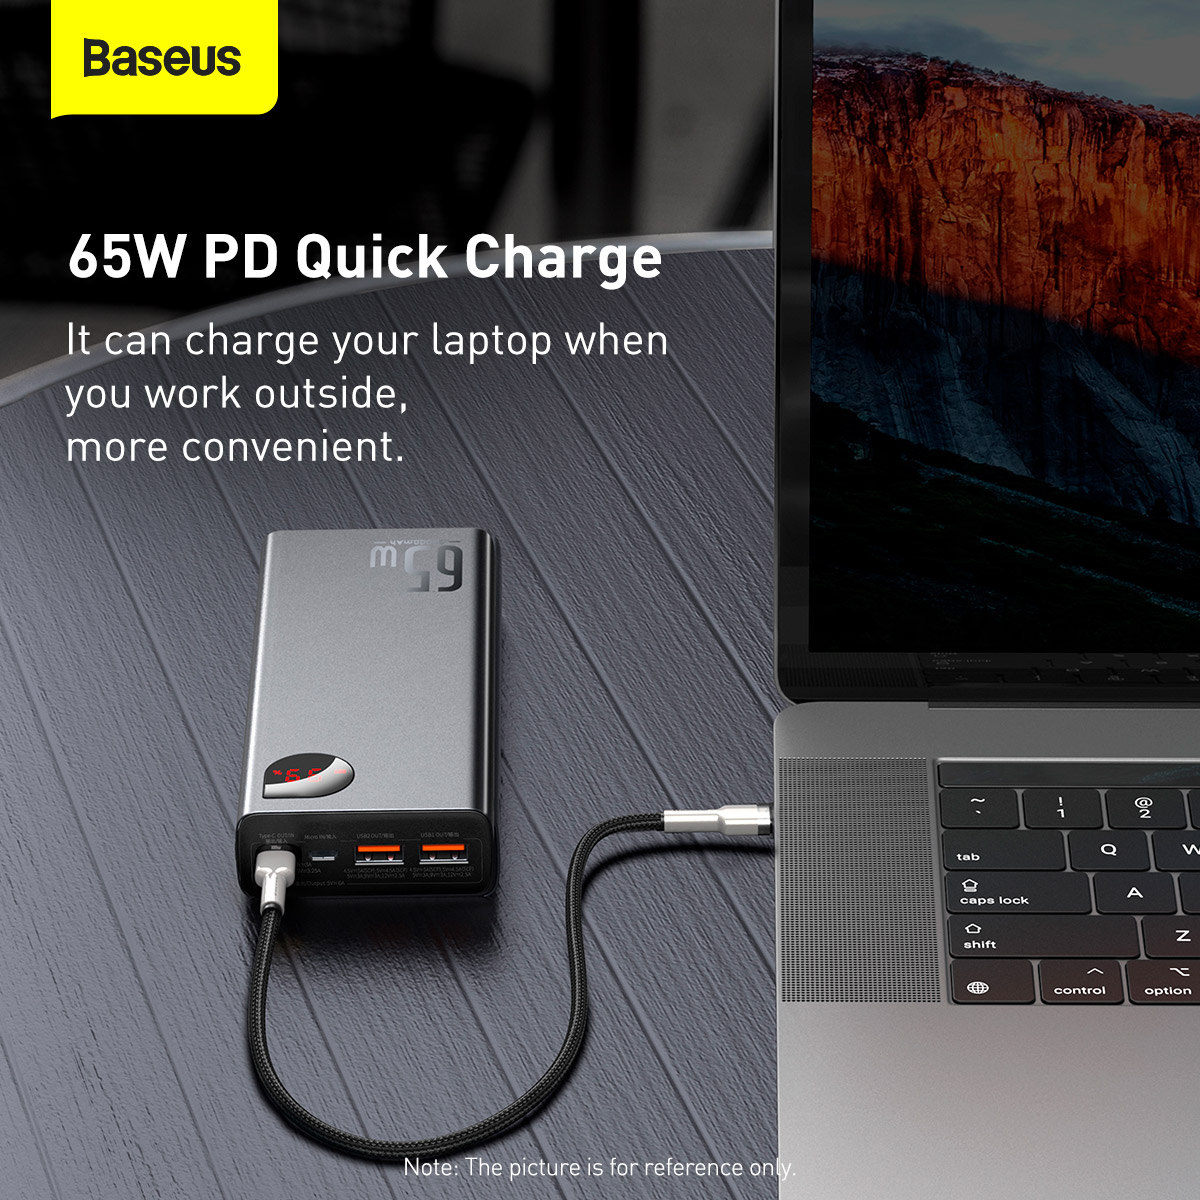 Baseus Adaman 65W Digital Power Bank review - All About Windows Phone